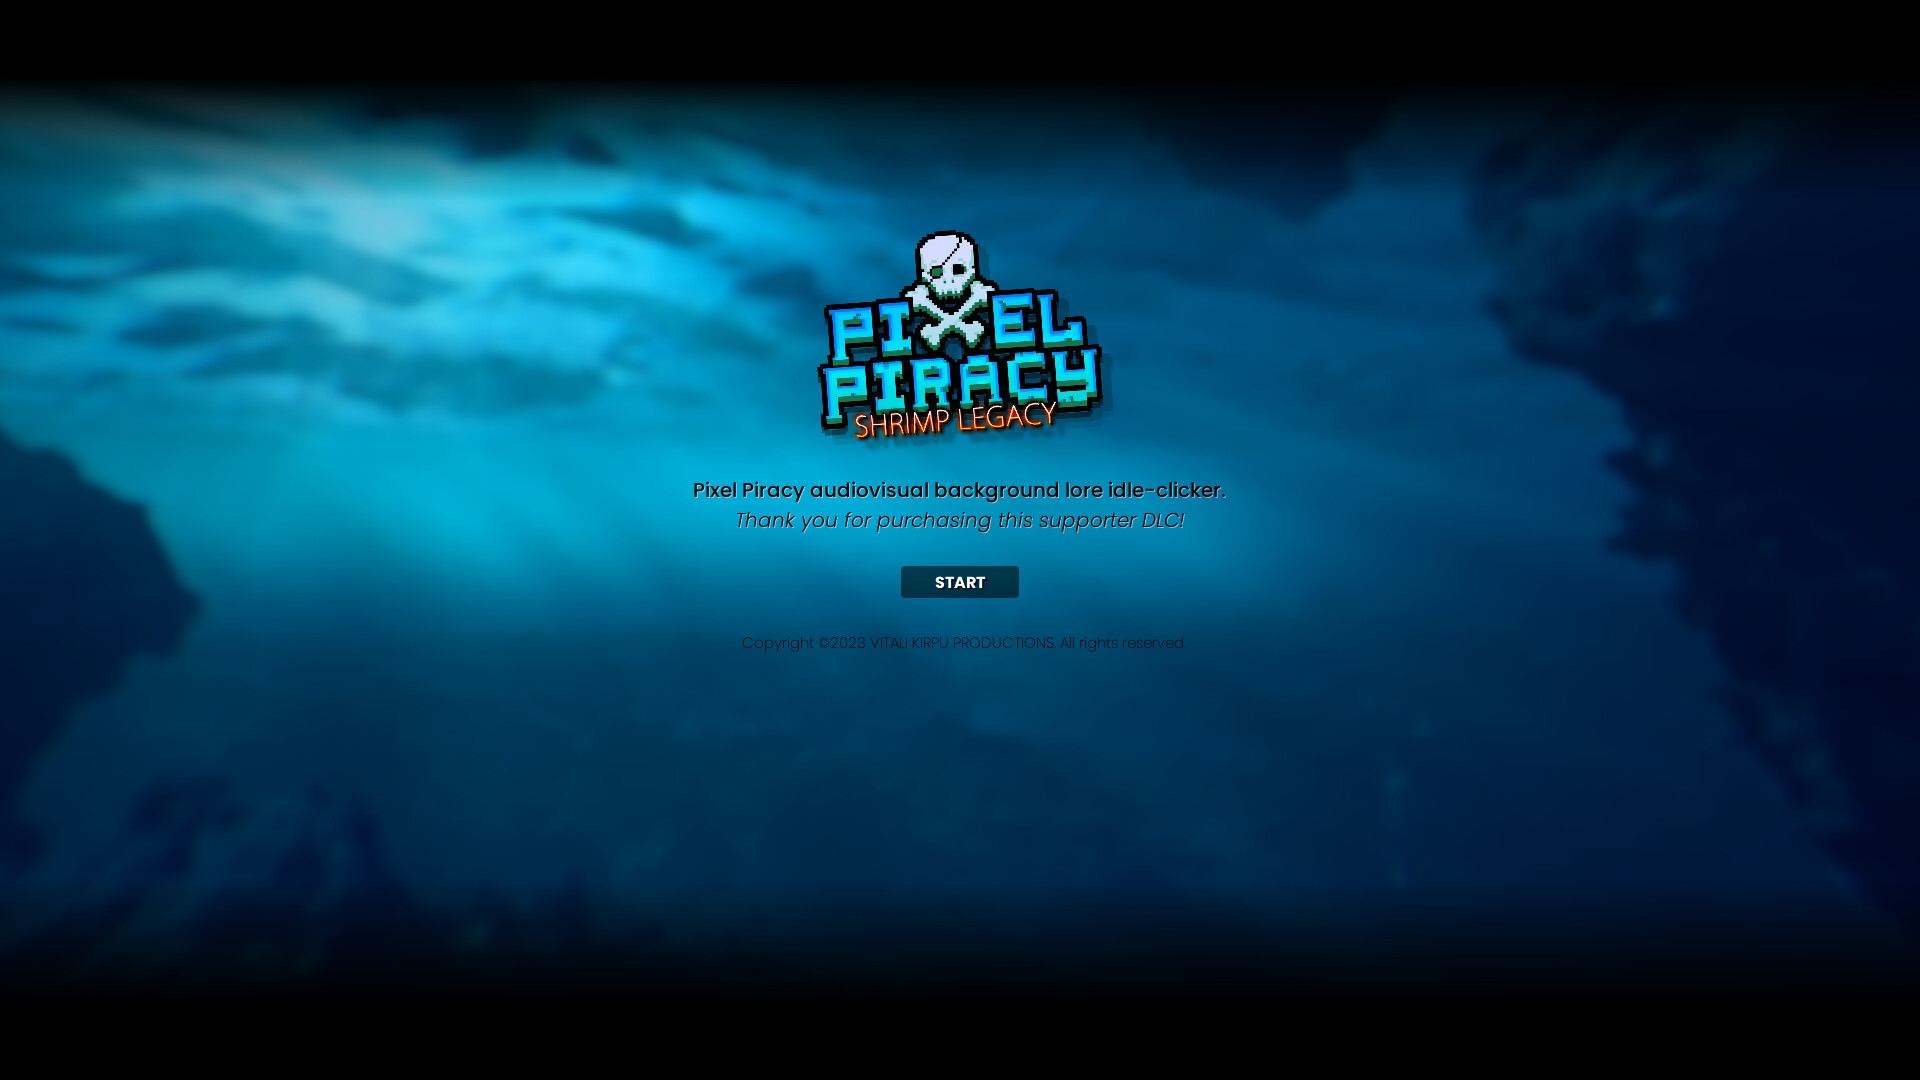 Pixel Piracy - Shrimp Legacy Free Download for PC